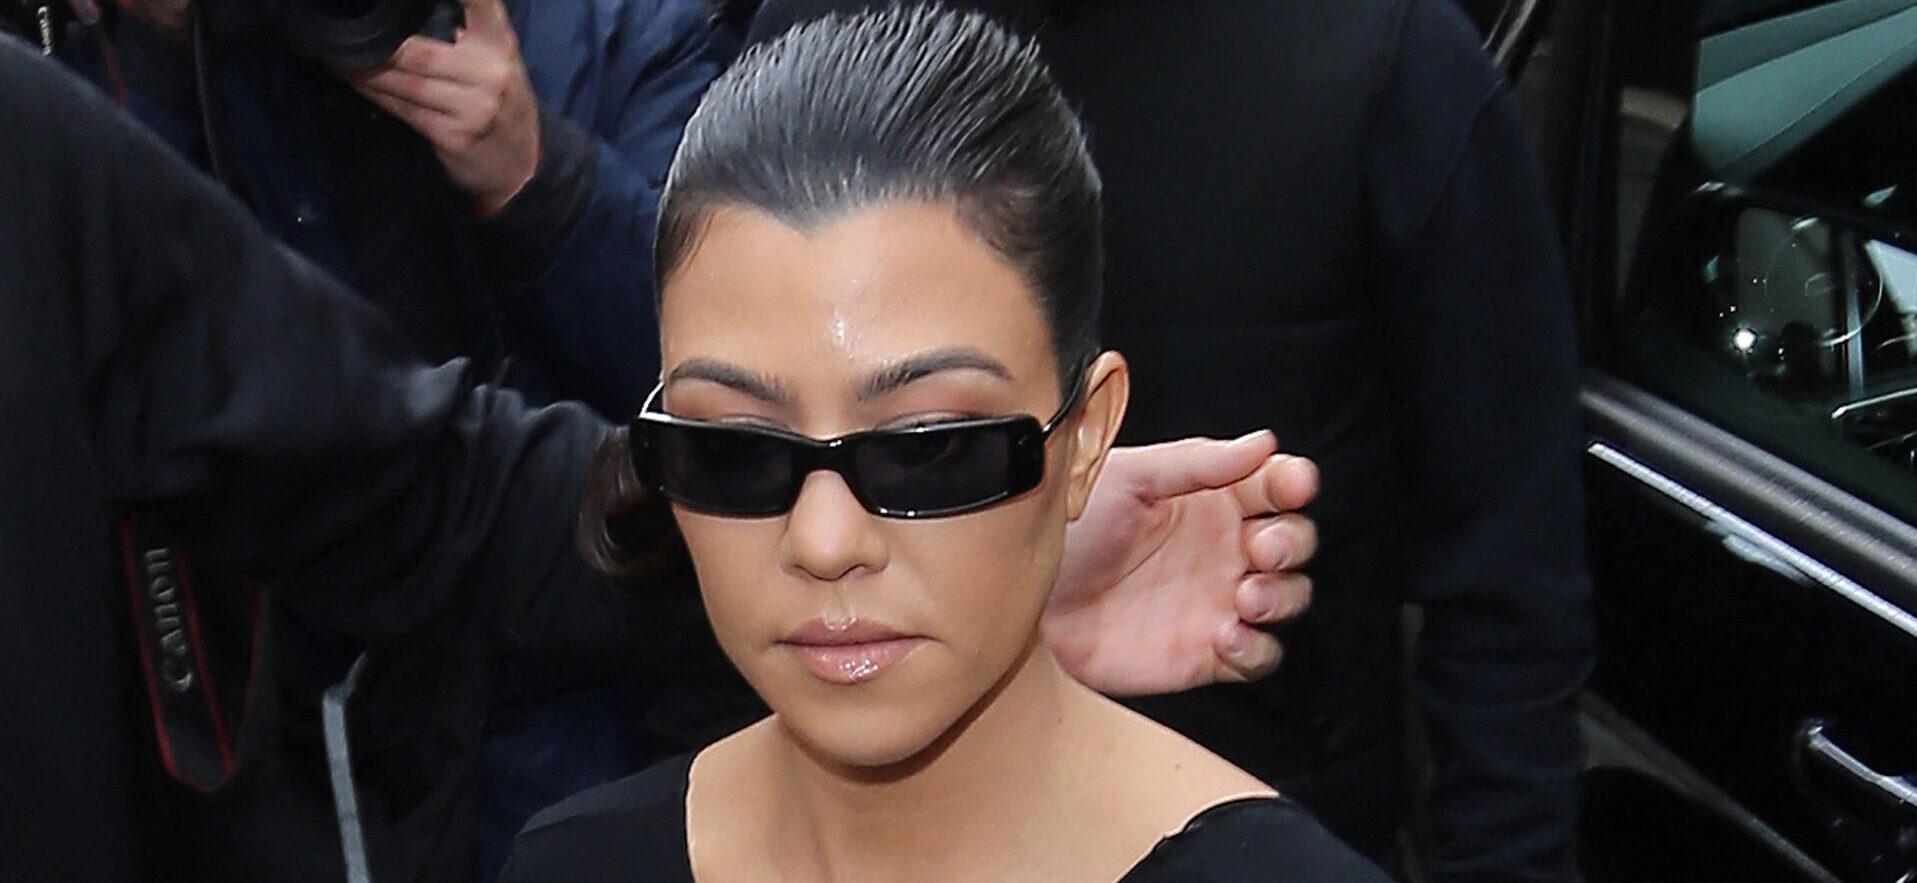 Kim Kardashian arrives with sister Kourtney for filming in Paris